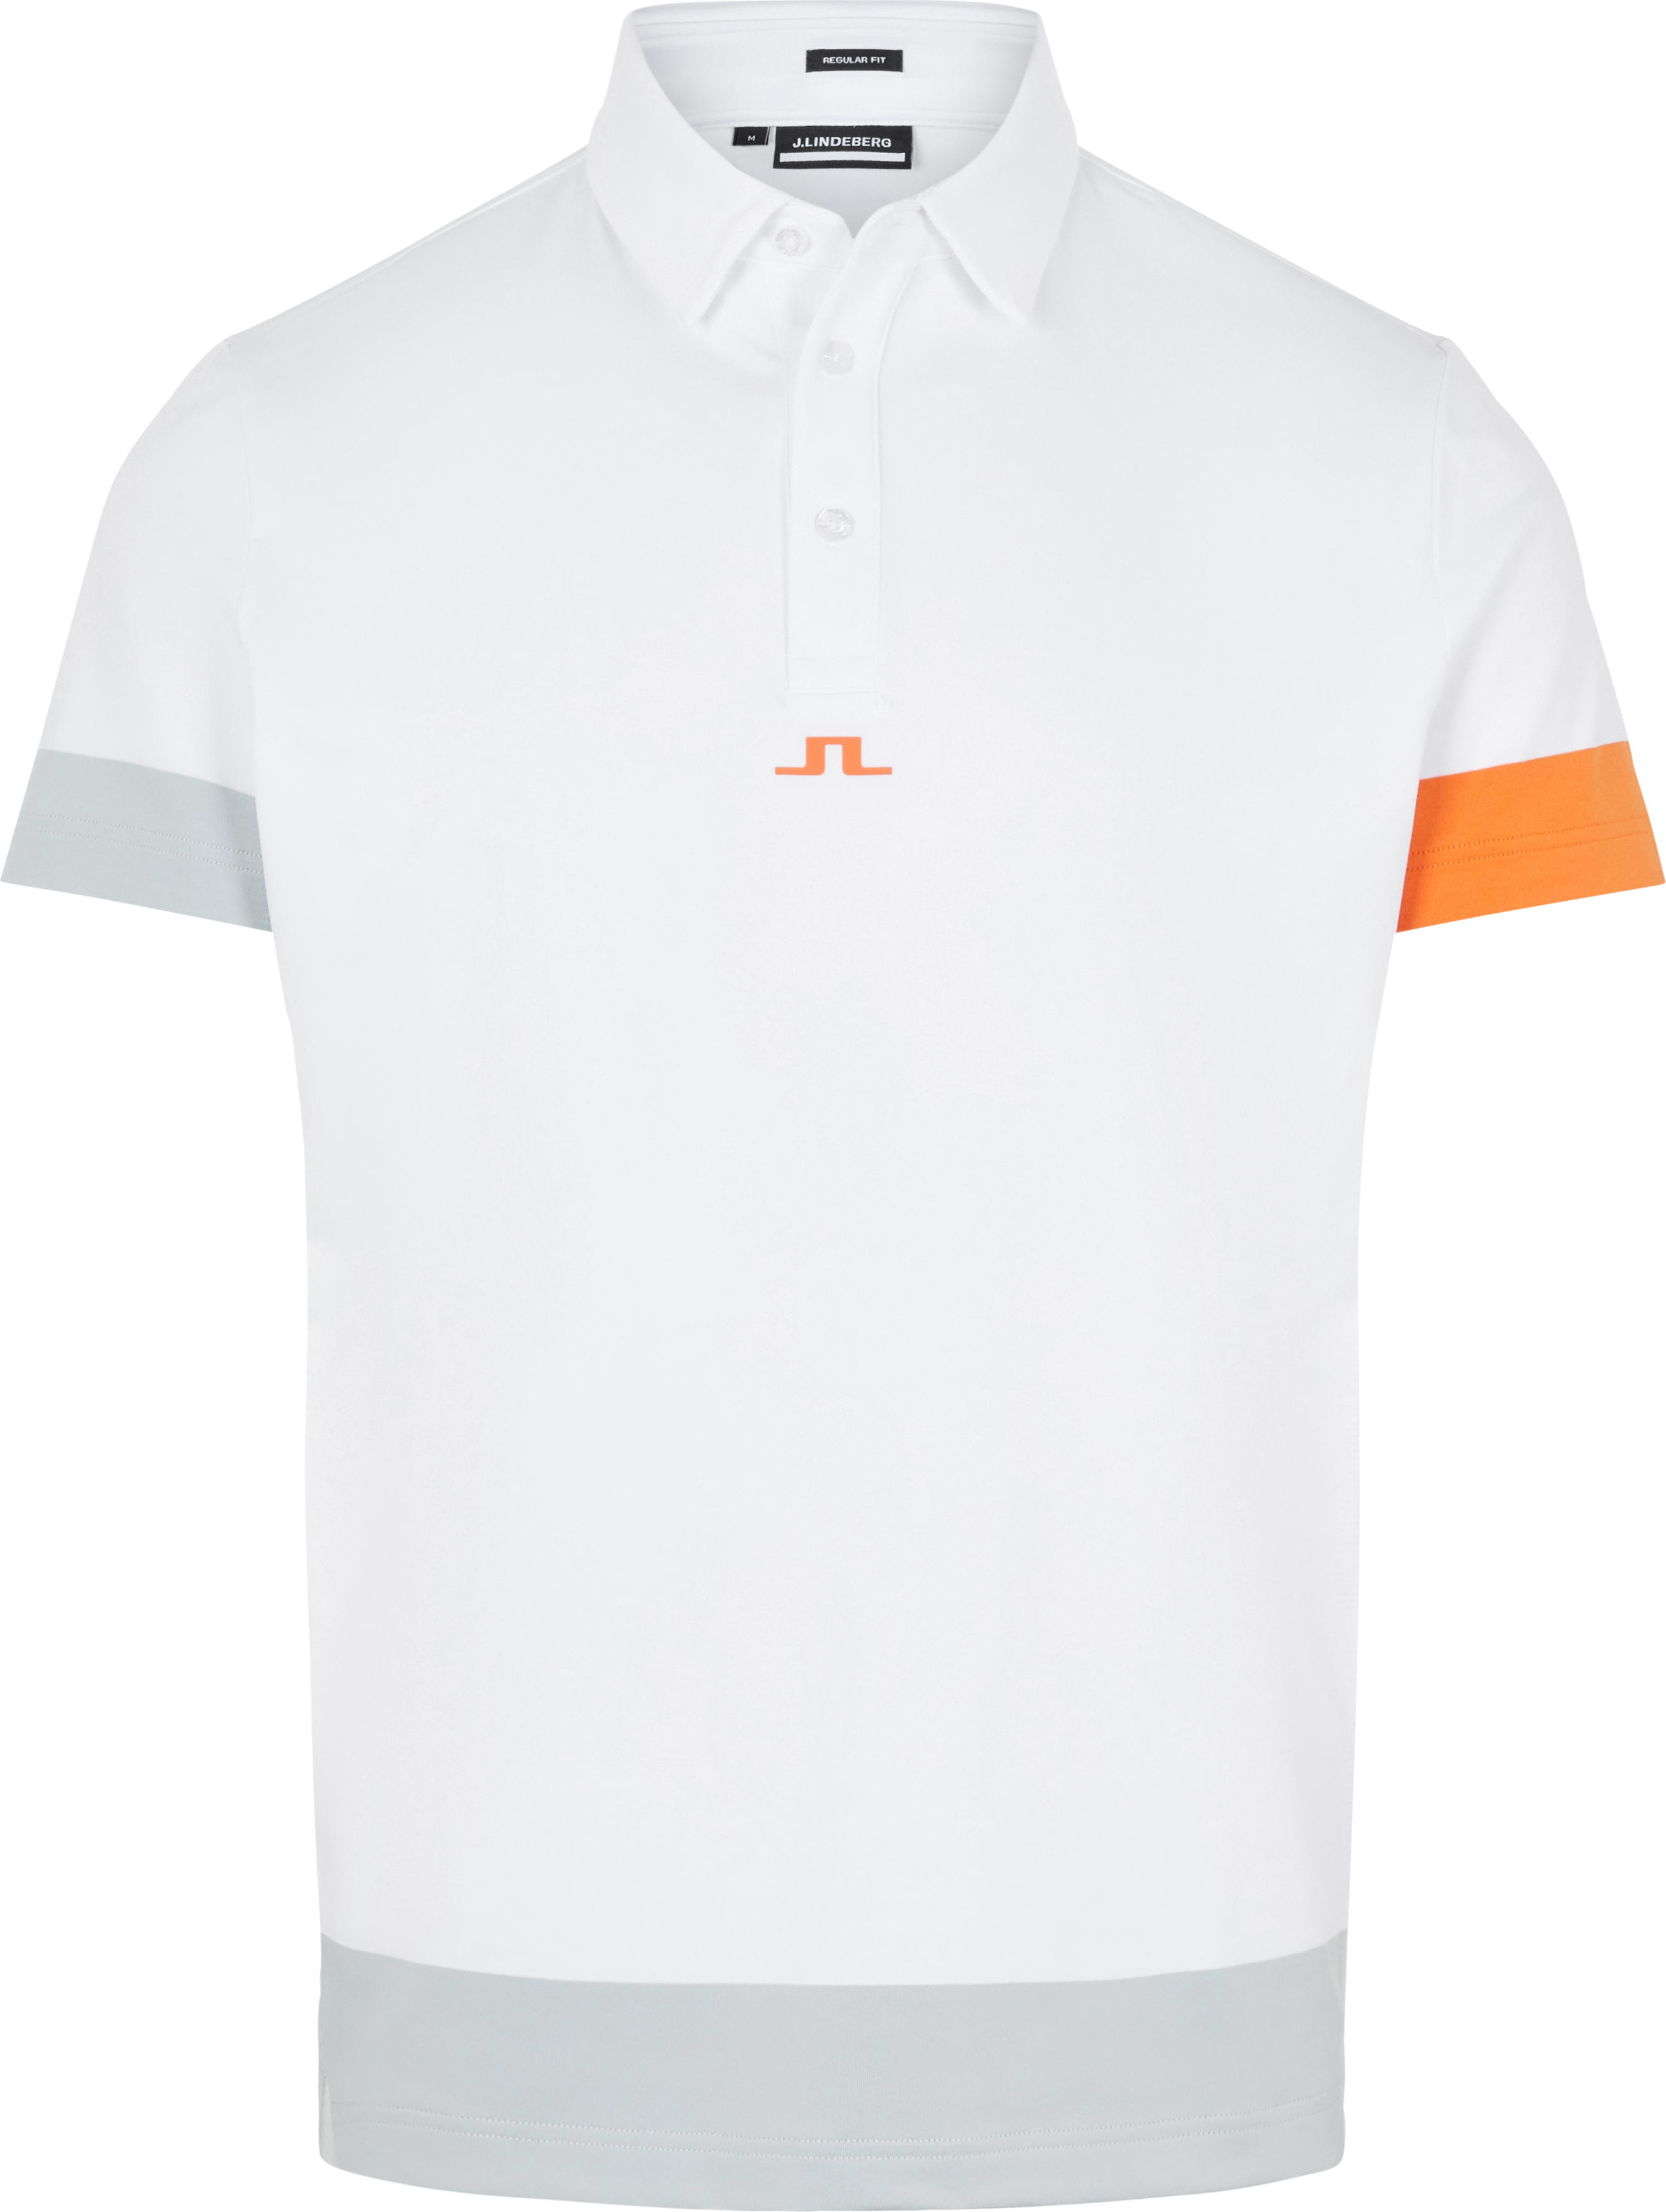 J.Lindeberg Per Regular Fit Golf Polo, white